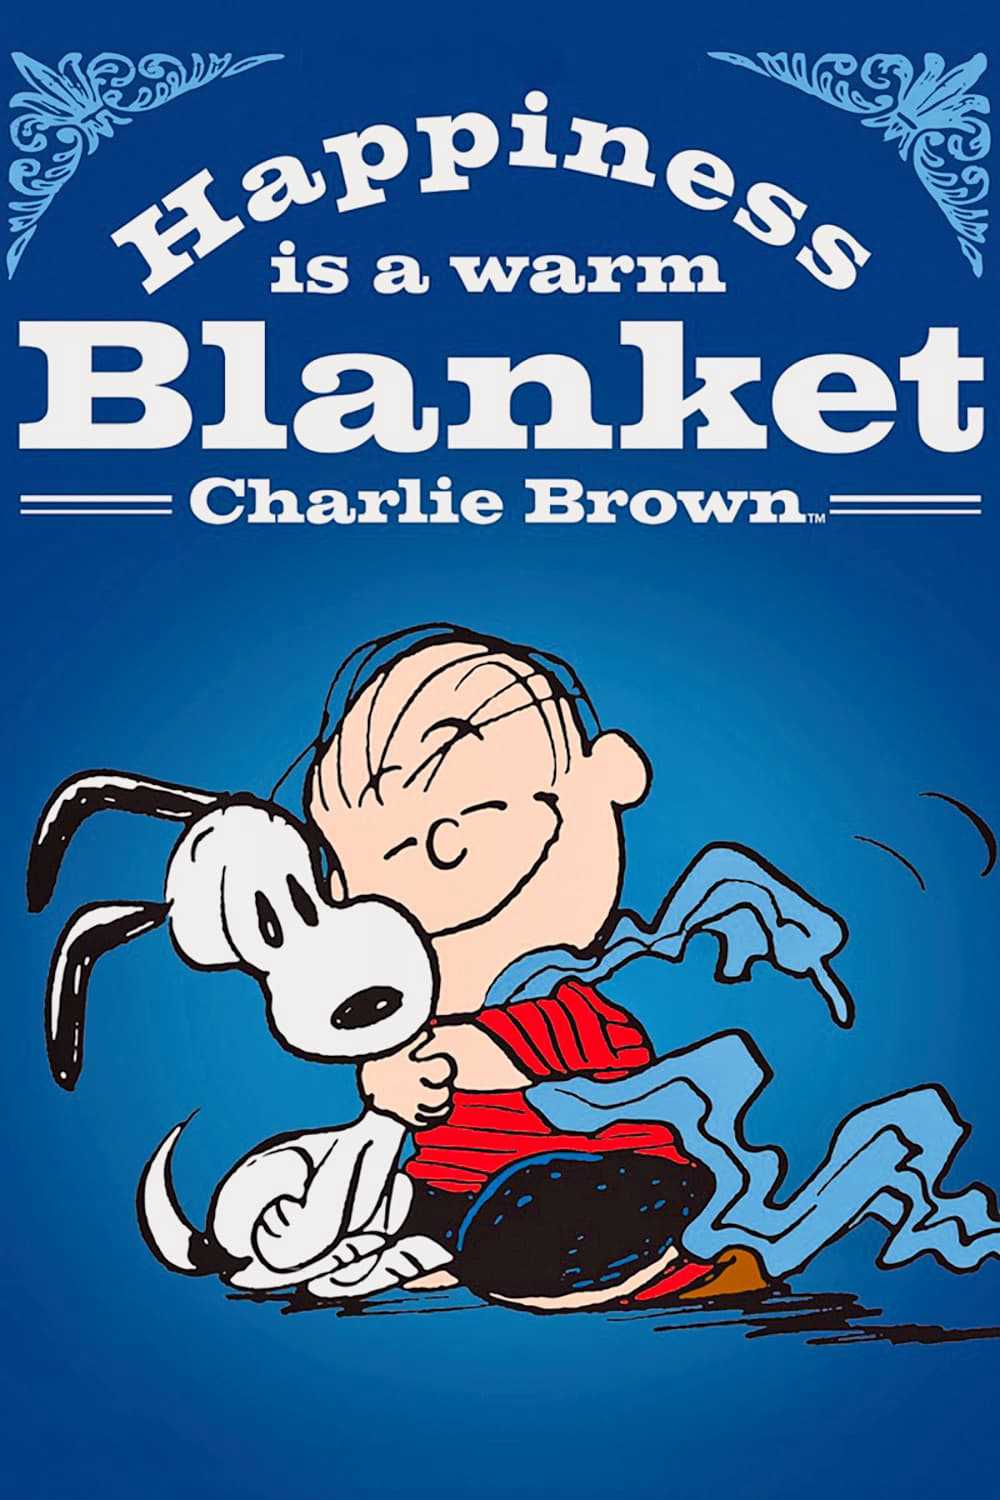 Cậu Bé Charlie Brown - Happiness Is a Warm Blanket, Charlie Brown